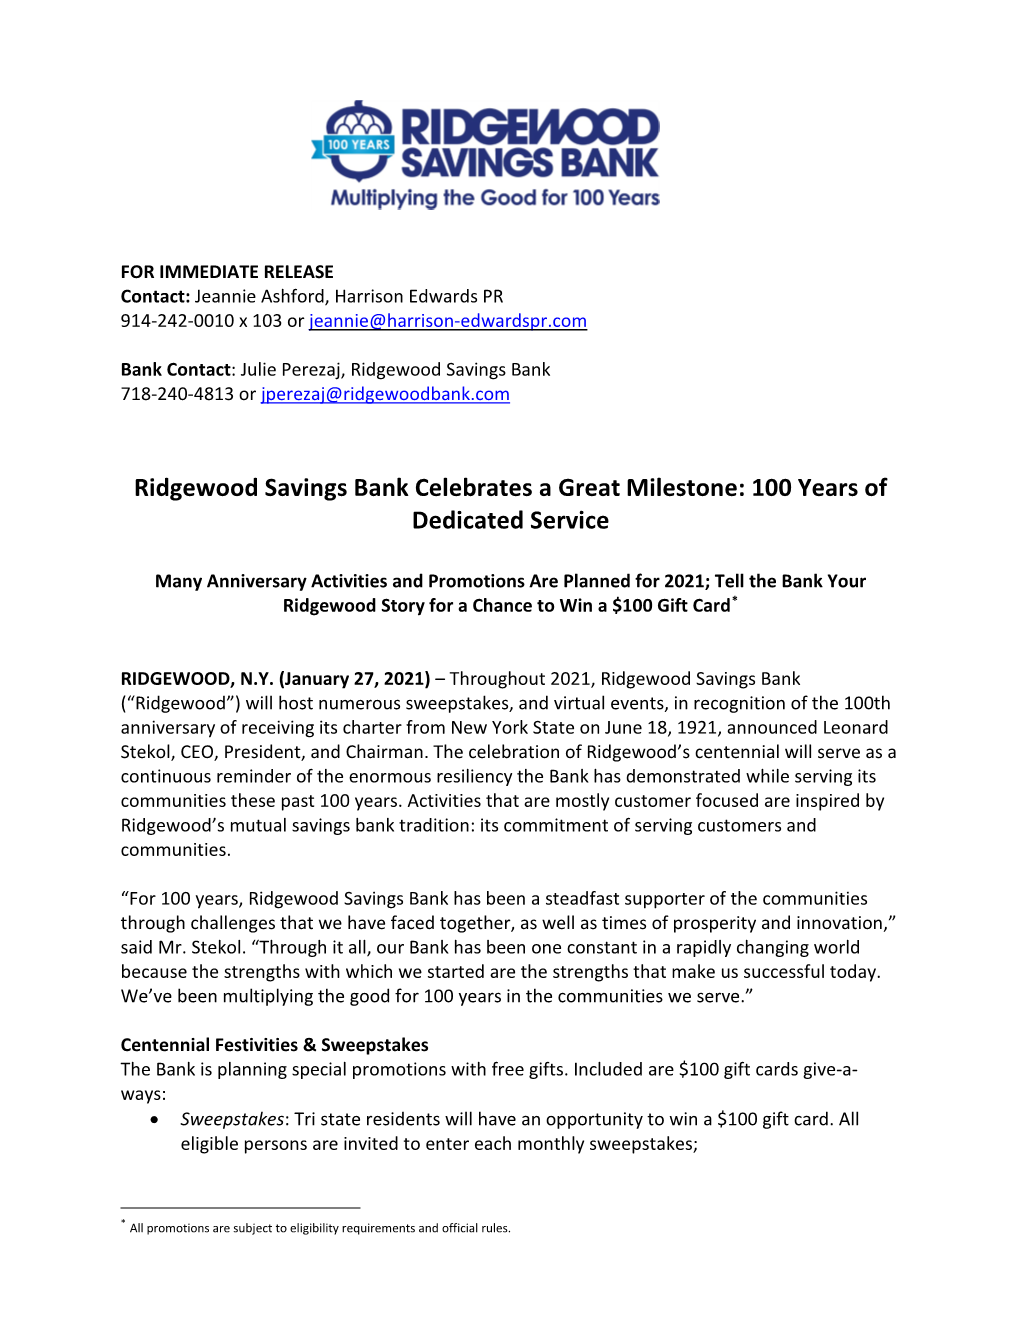 Ridgewood Savings Bank Celebrates a Great Milestone: 100 Years of Dedicated Service